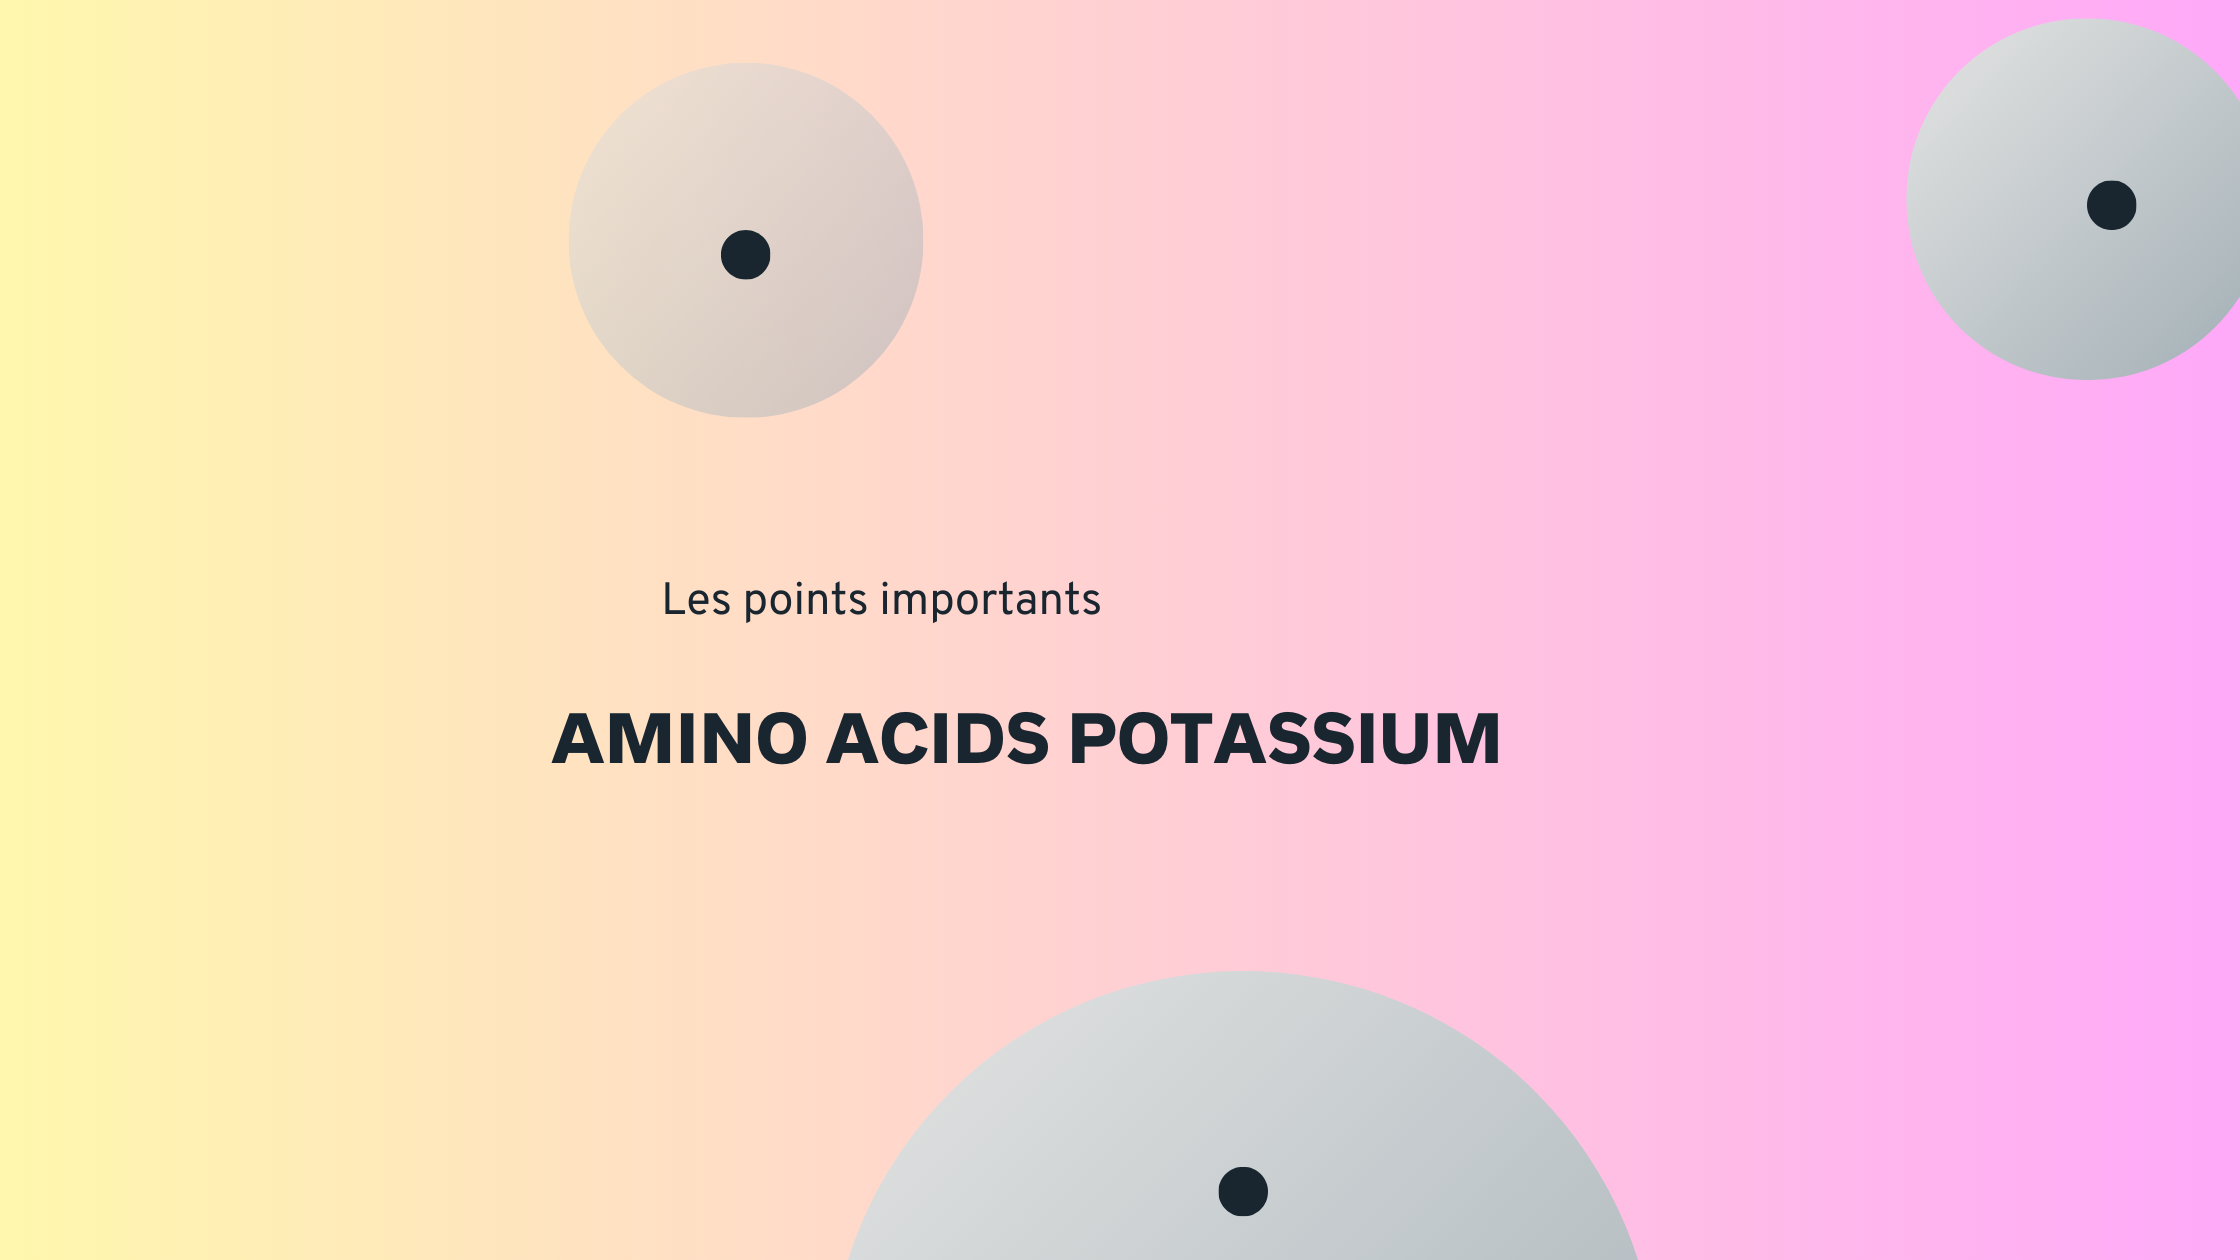 amino acids potassium | Les points importants